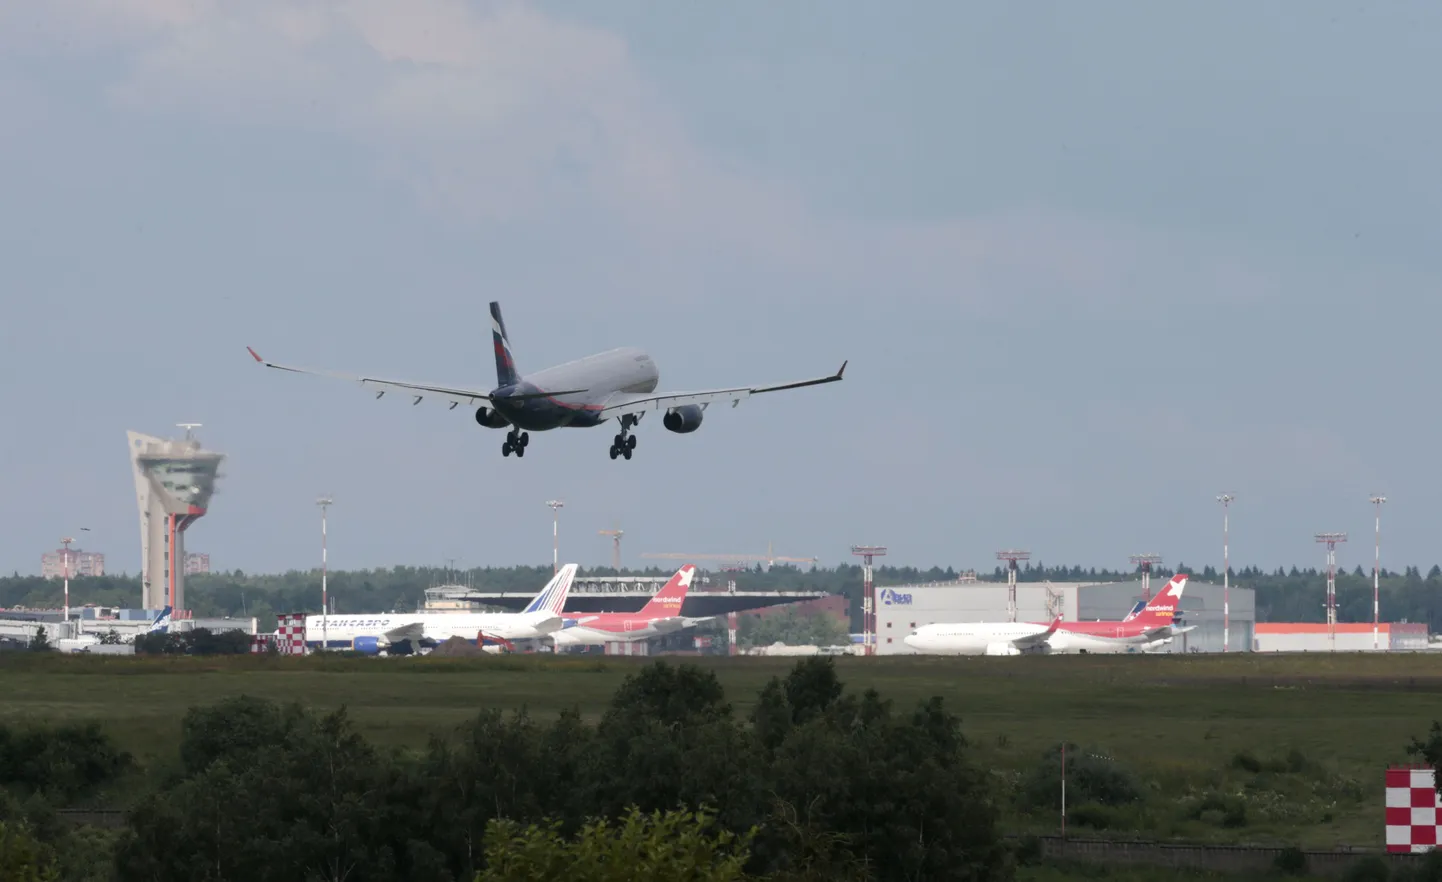 Aerofloti lennuk, mille pardal on Edward Snowden, valmistub maanduma Šeremetjevo lennuväljale.